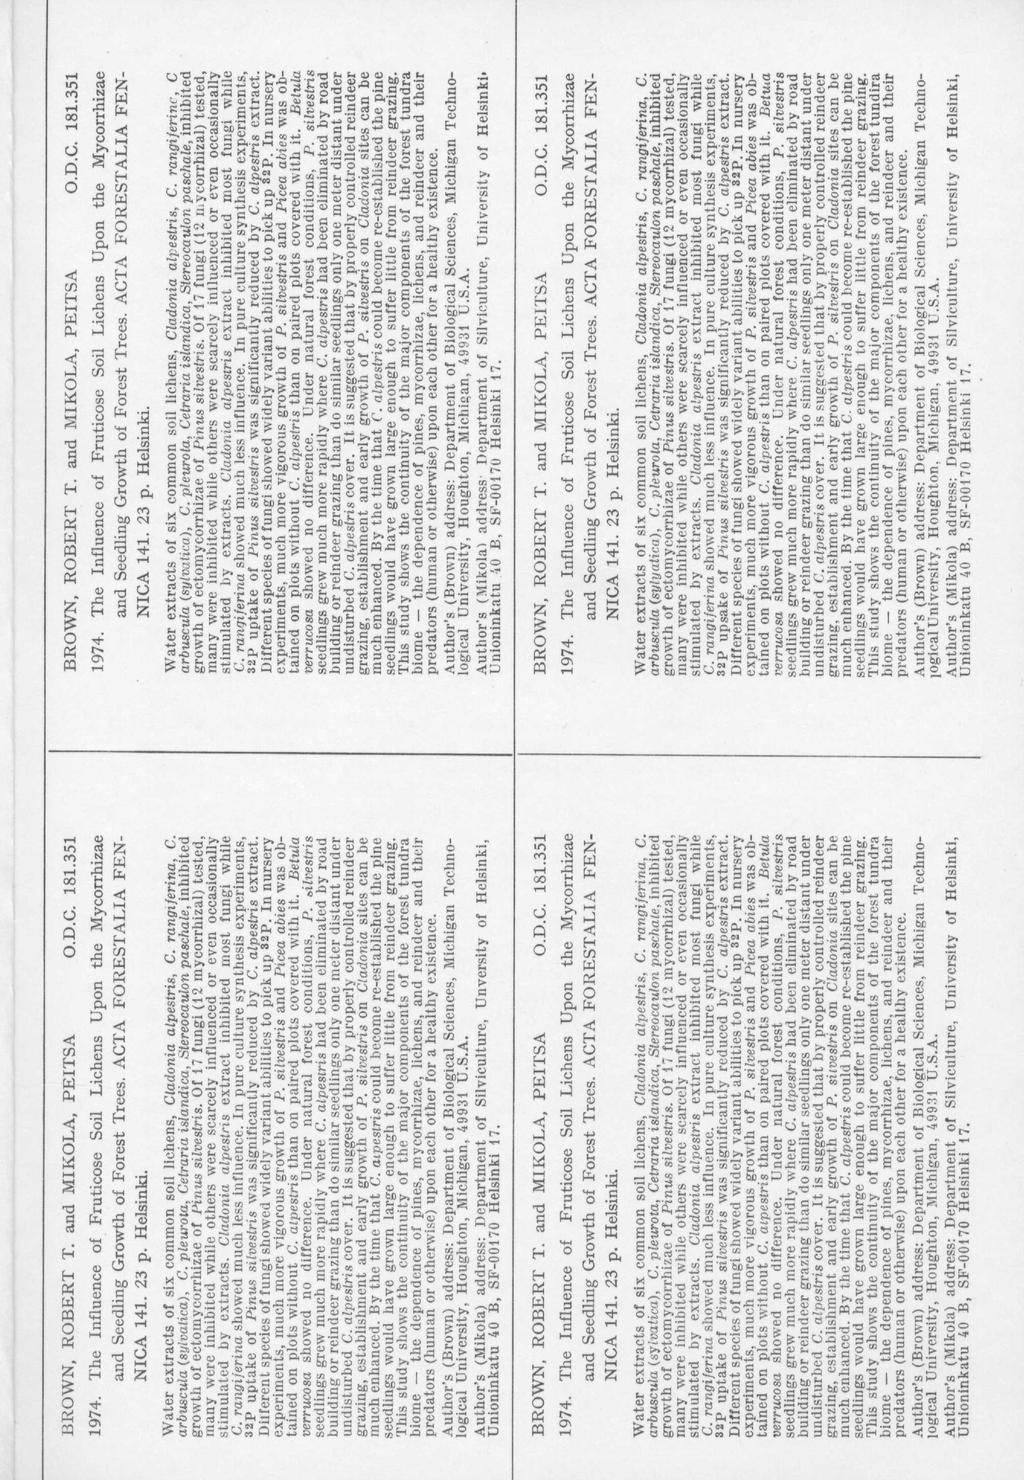 BROWN, ROBERT T. and MIKOLA, PEITSA O.D.C. 181.351 BROWN, ROBERT T. and MIKOLA, PEITSA O.D.C. 181.351 1974. The Influence of Fruticose Soil Lichens Upon the Mycorrhizae 1974.